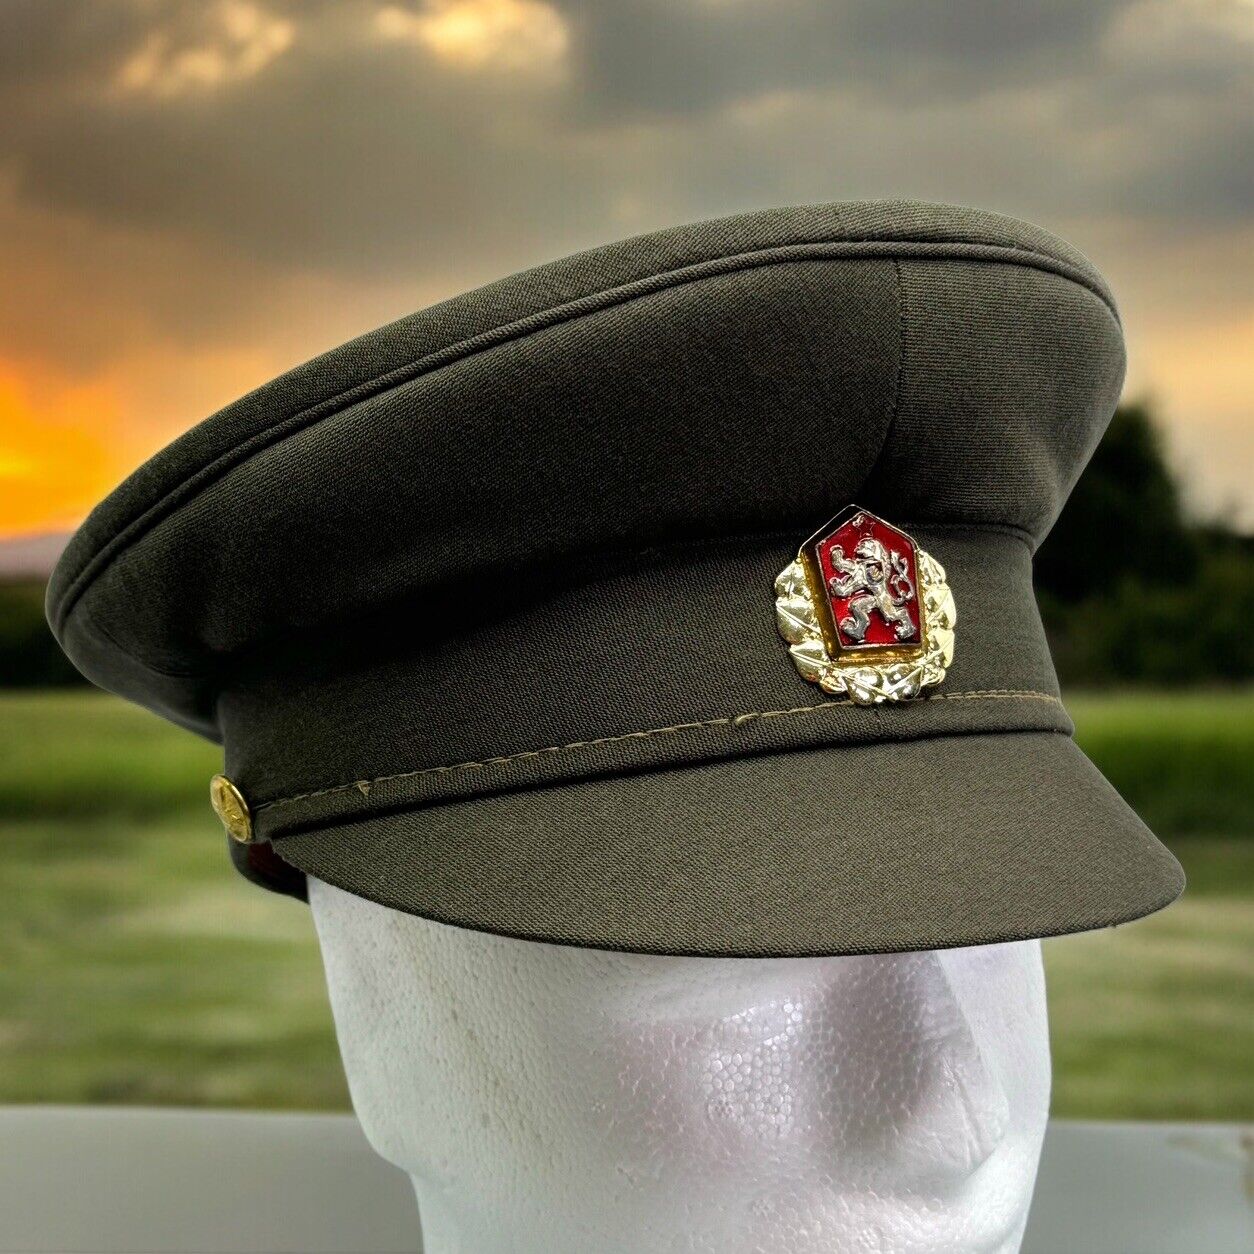 Original 1980s Issued Czech Czechoslovakian Peaked Military Service Cap Clean